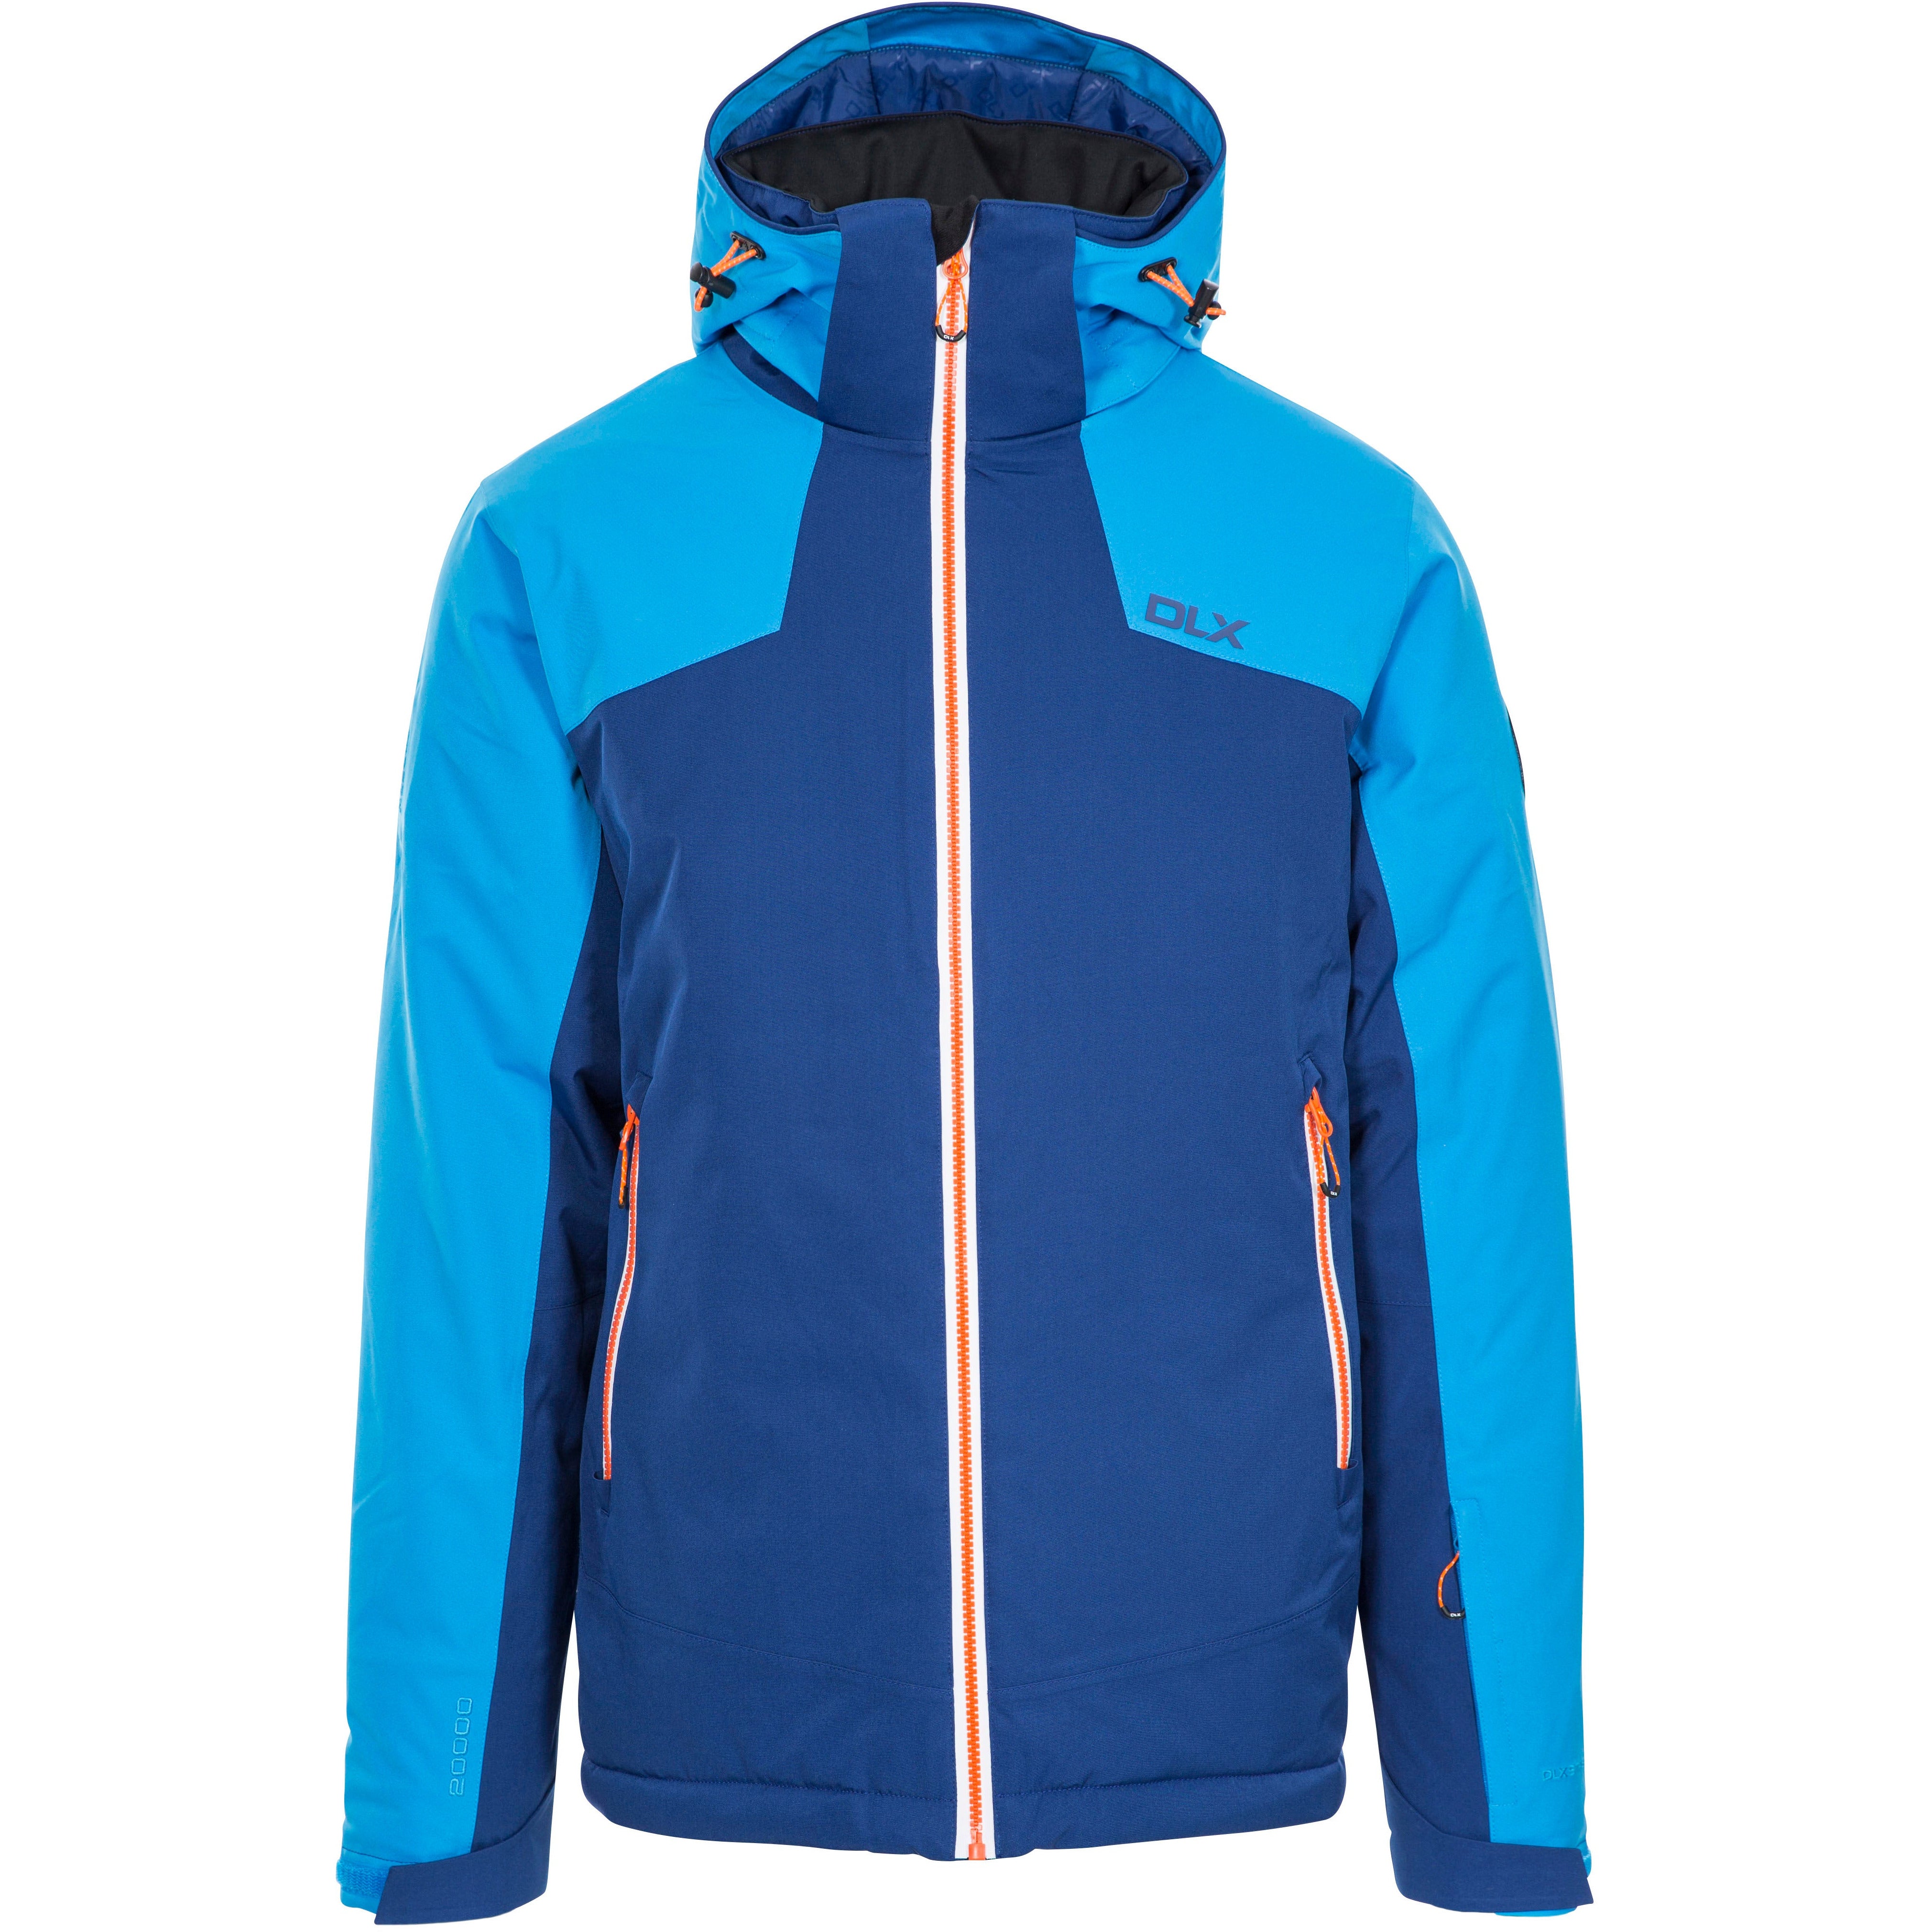 Men's Ski Jackets Ireland | Ski Clothing for Men | Trespass Ireland